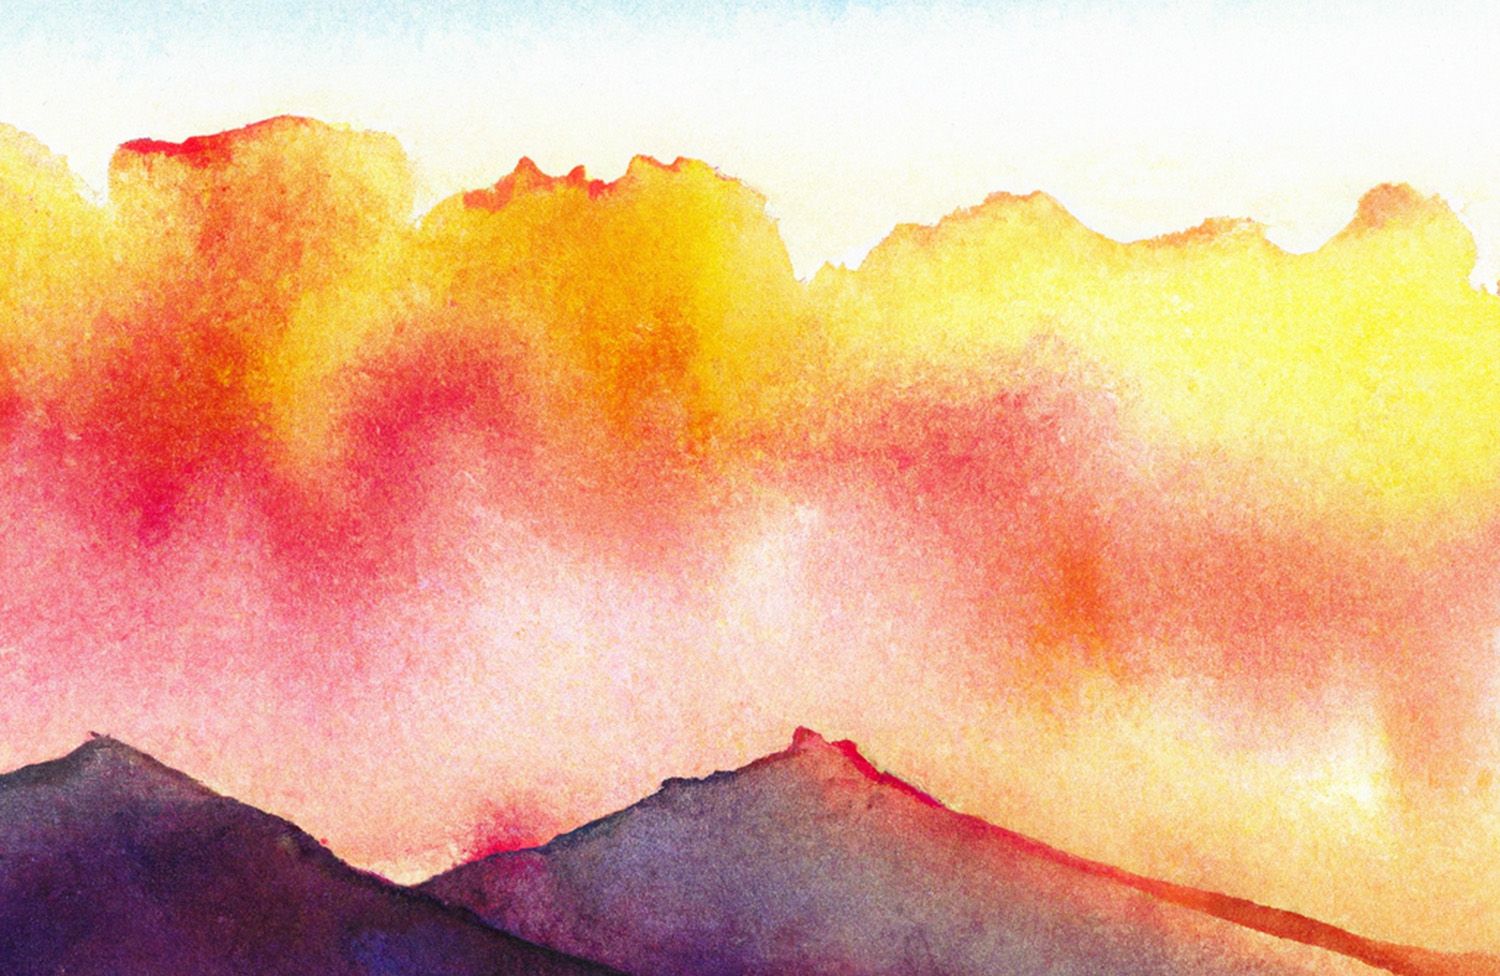 DALL·E 2023 01 10 09.08.56 Mountain ridge at sunset in watercolor 1500.jpg.optimal